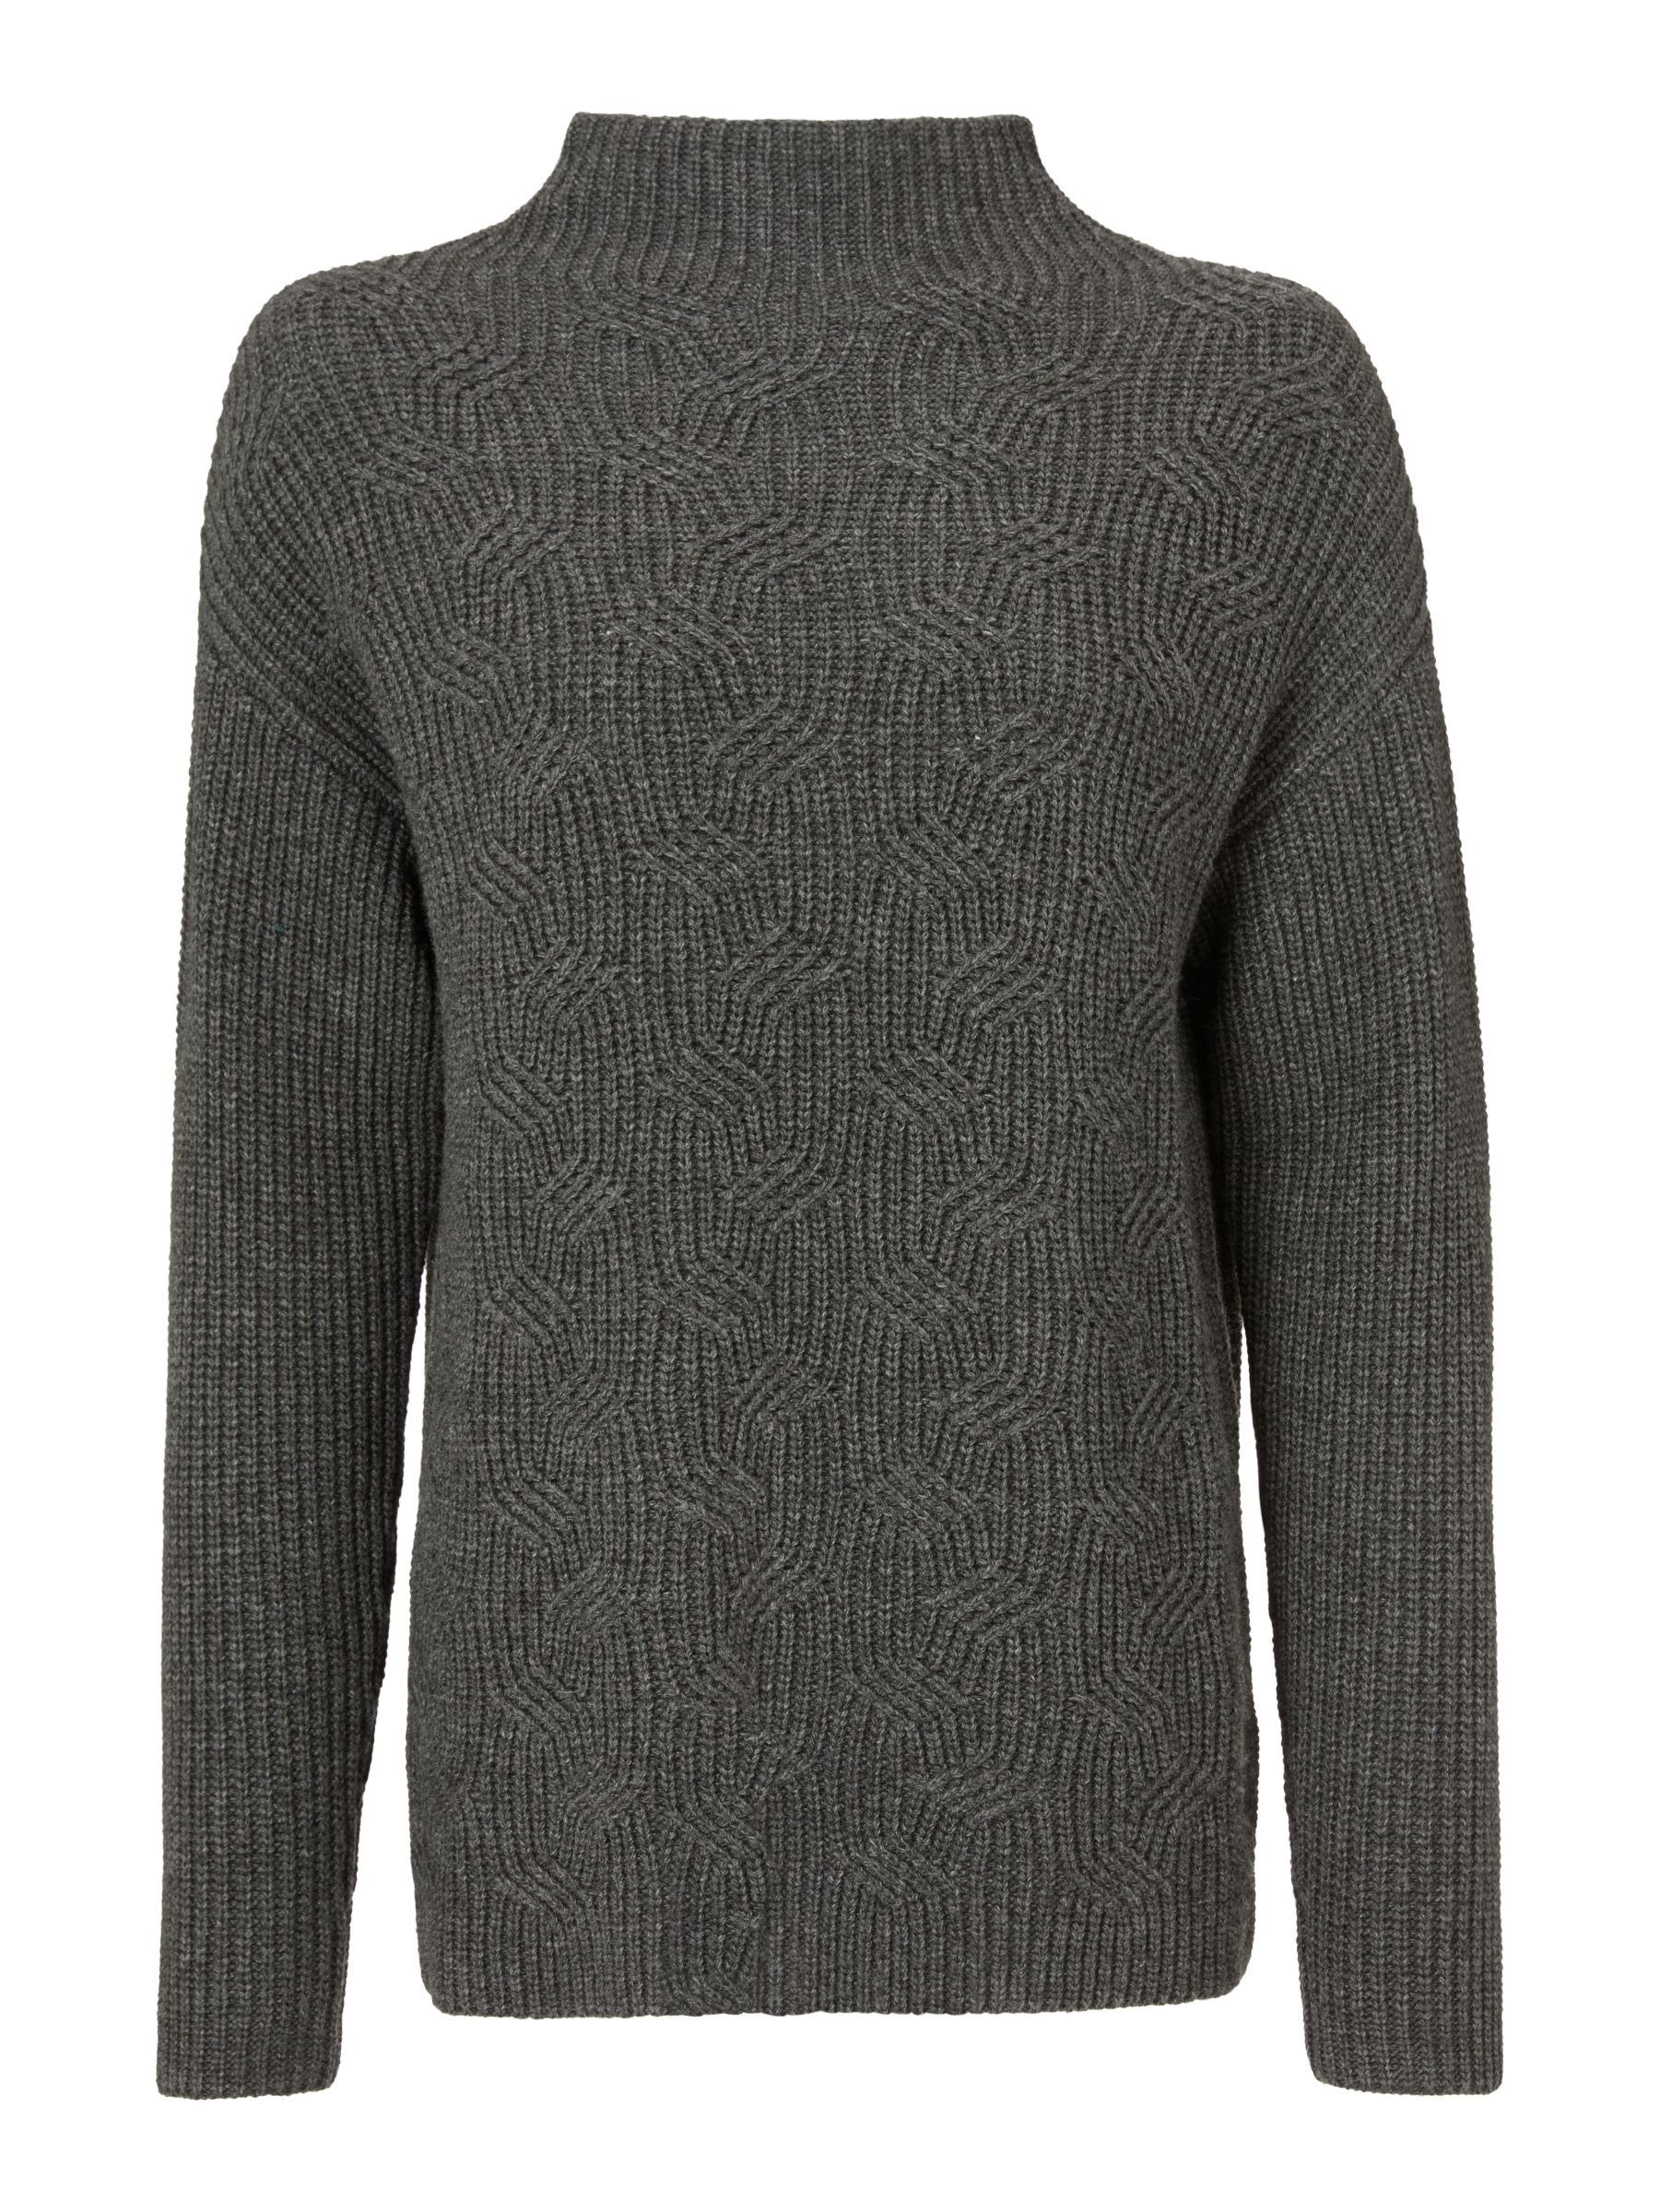 John Lewis & Partners Transfer Rib Sweater